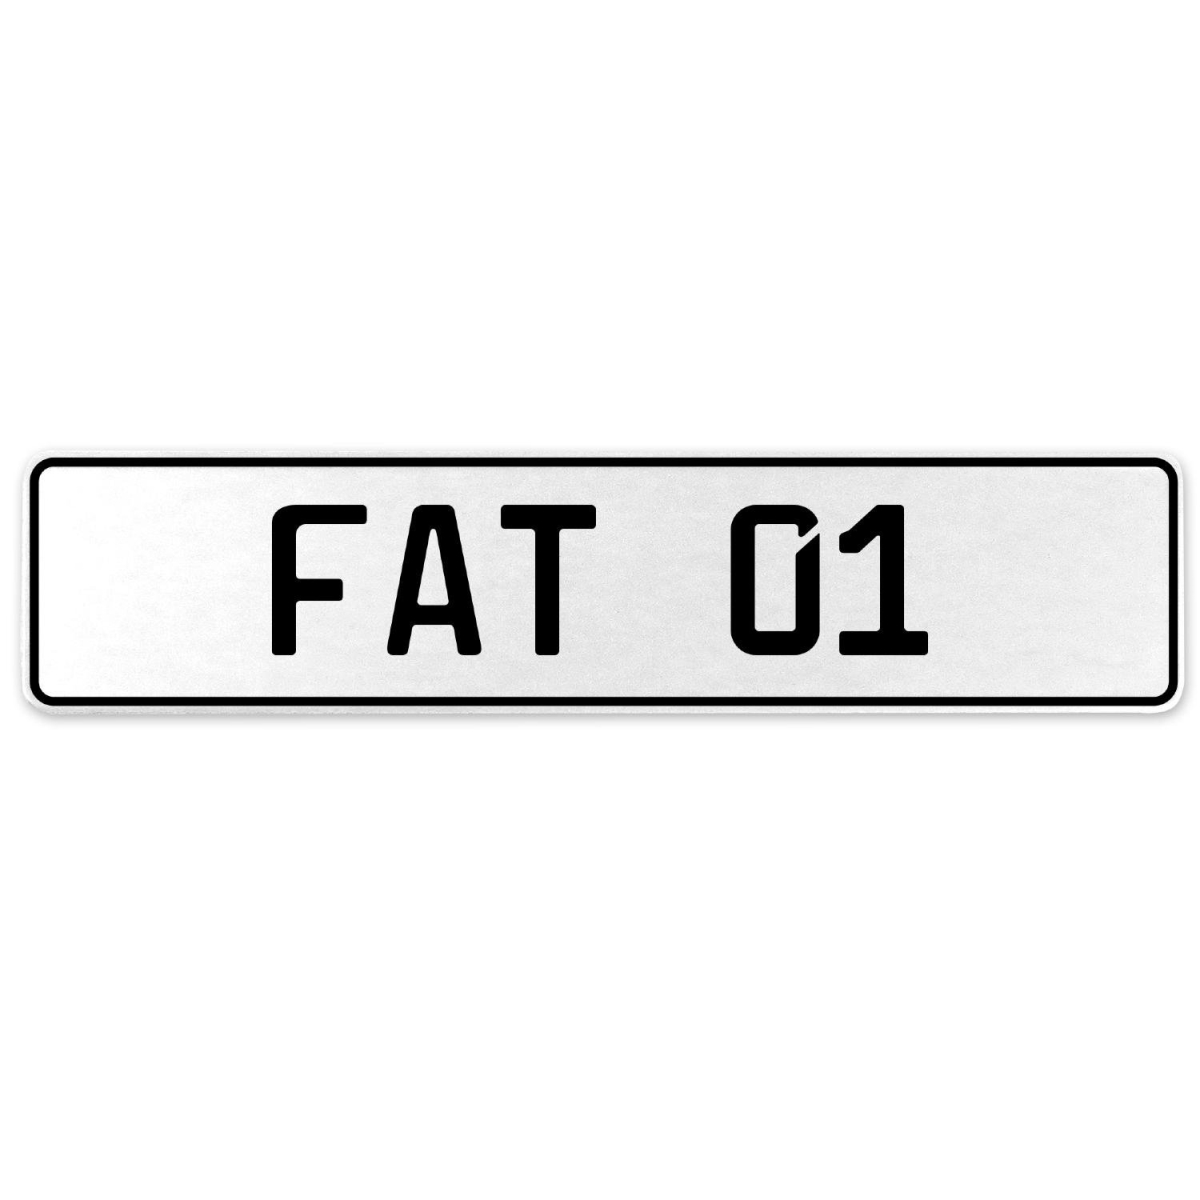 554499 Fat 01 - White Aluminum Street Sign Mancave Euro Plate Name Door Sign Wall Art